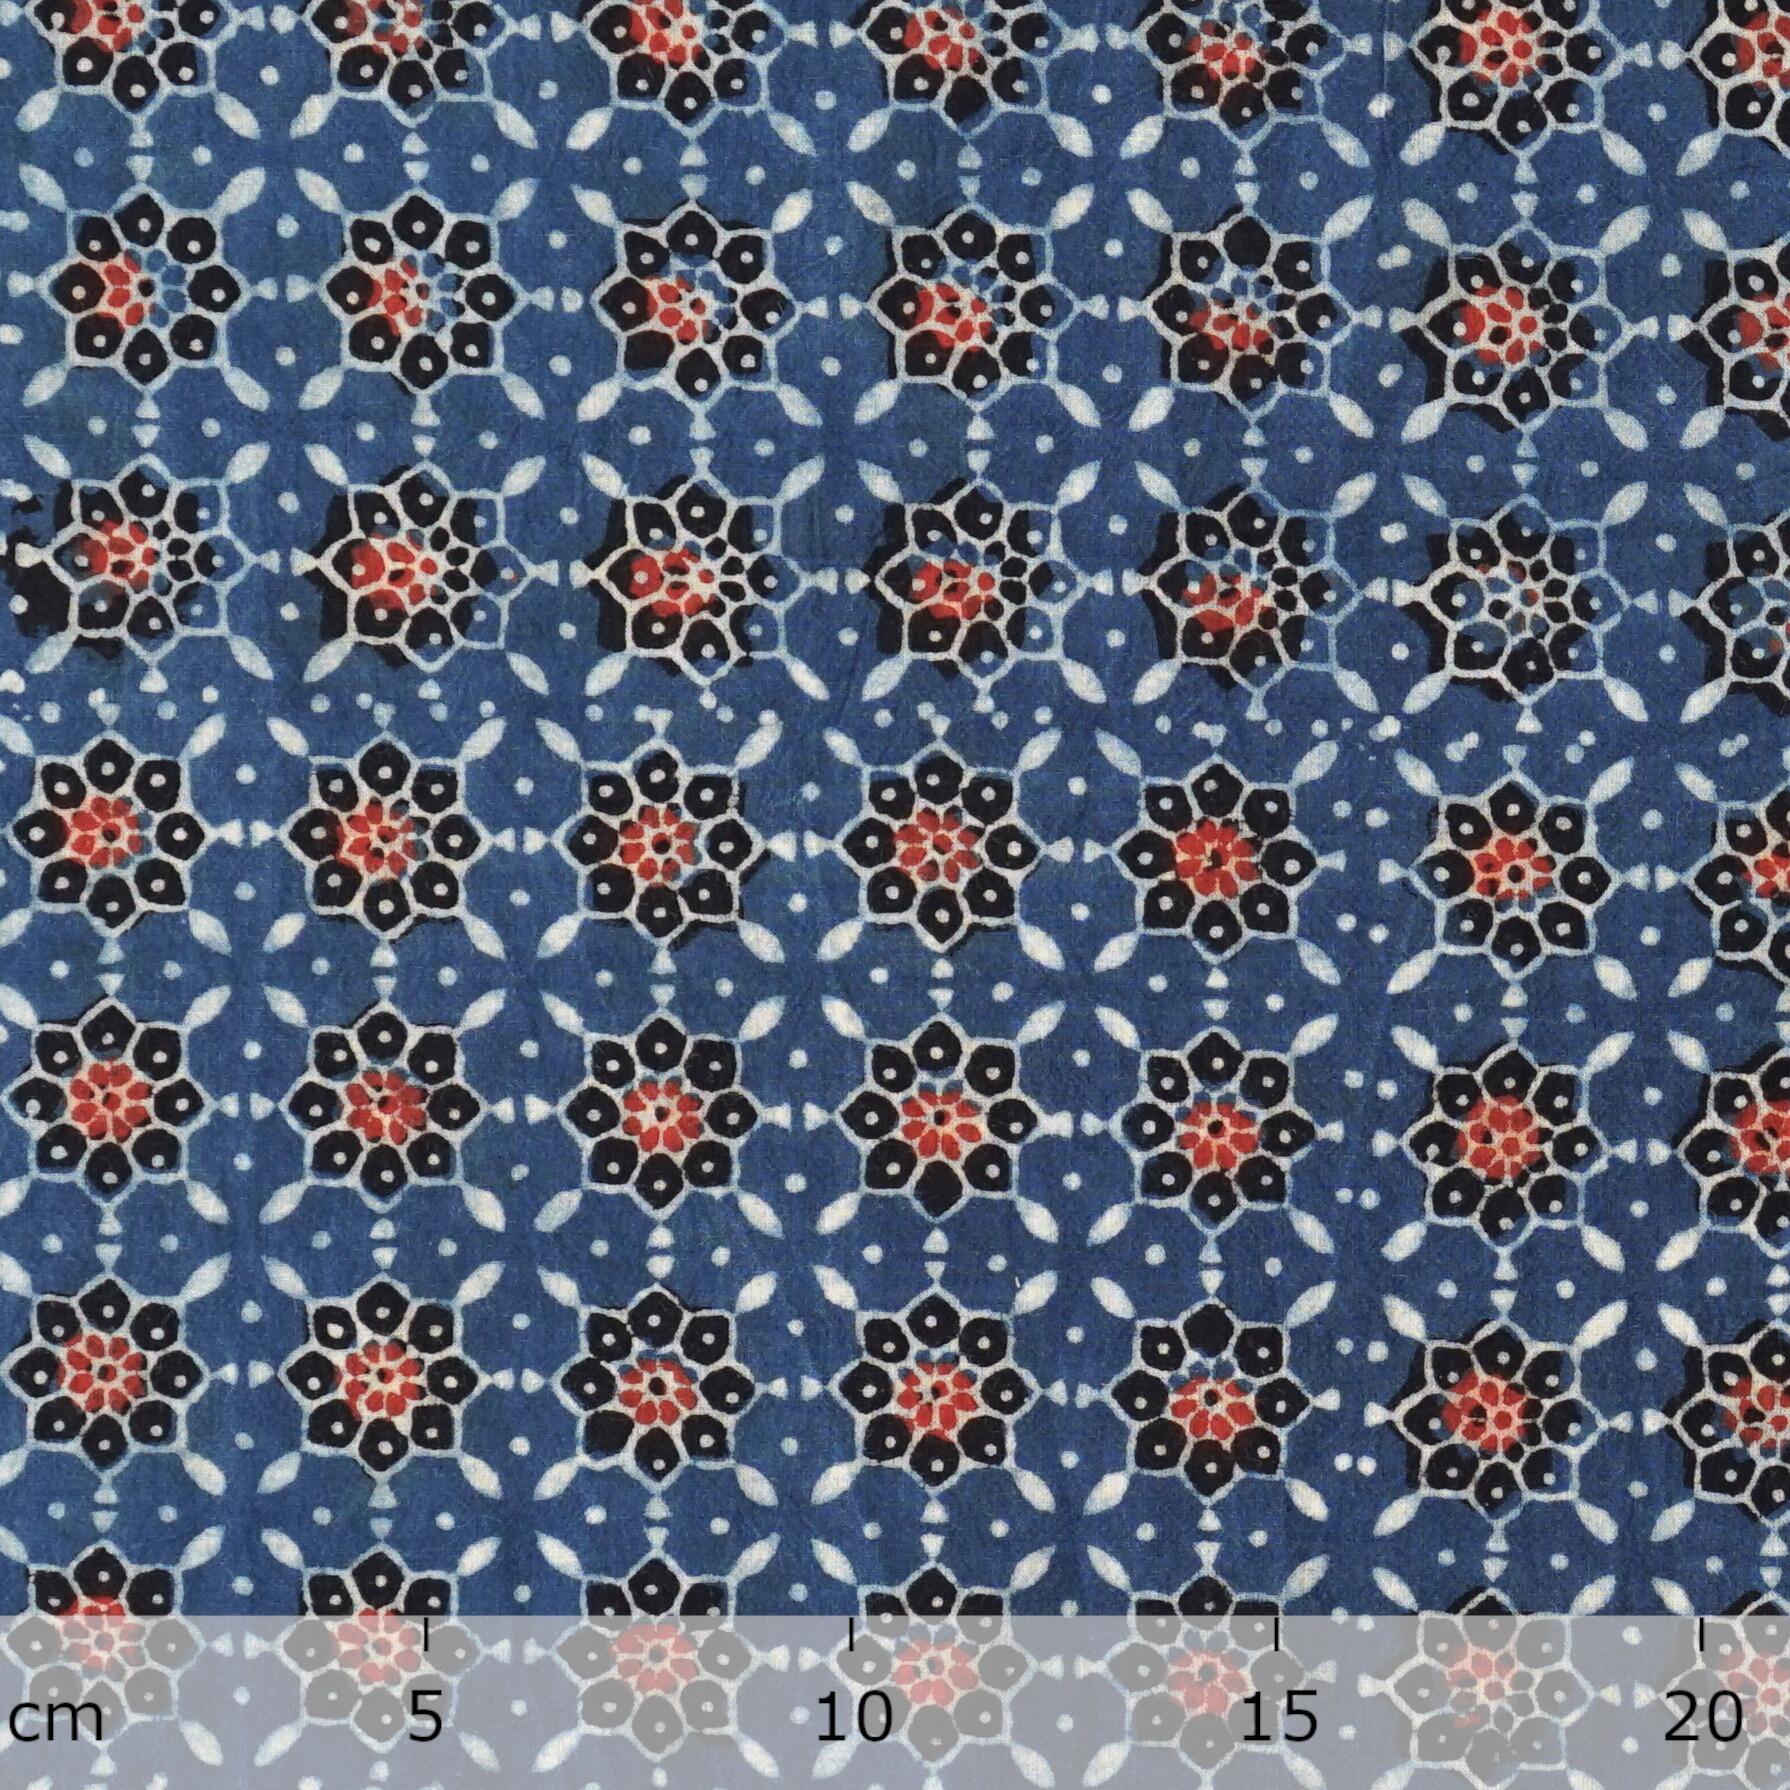 Block-Printed Cotton from India - Starburst Print - Indigo, Alizarin Red, Black - Ruler